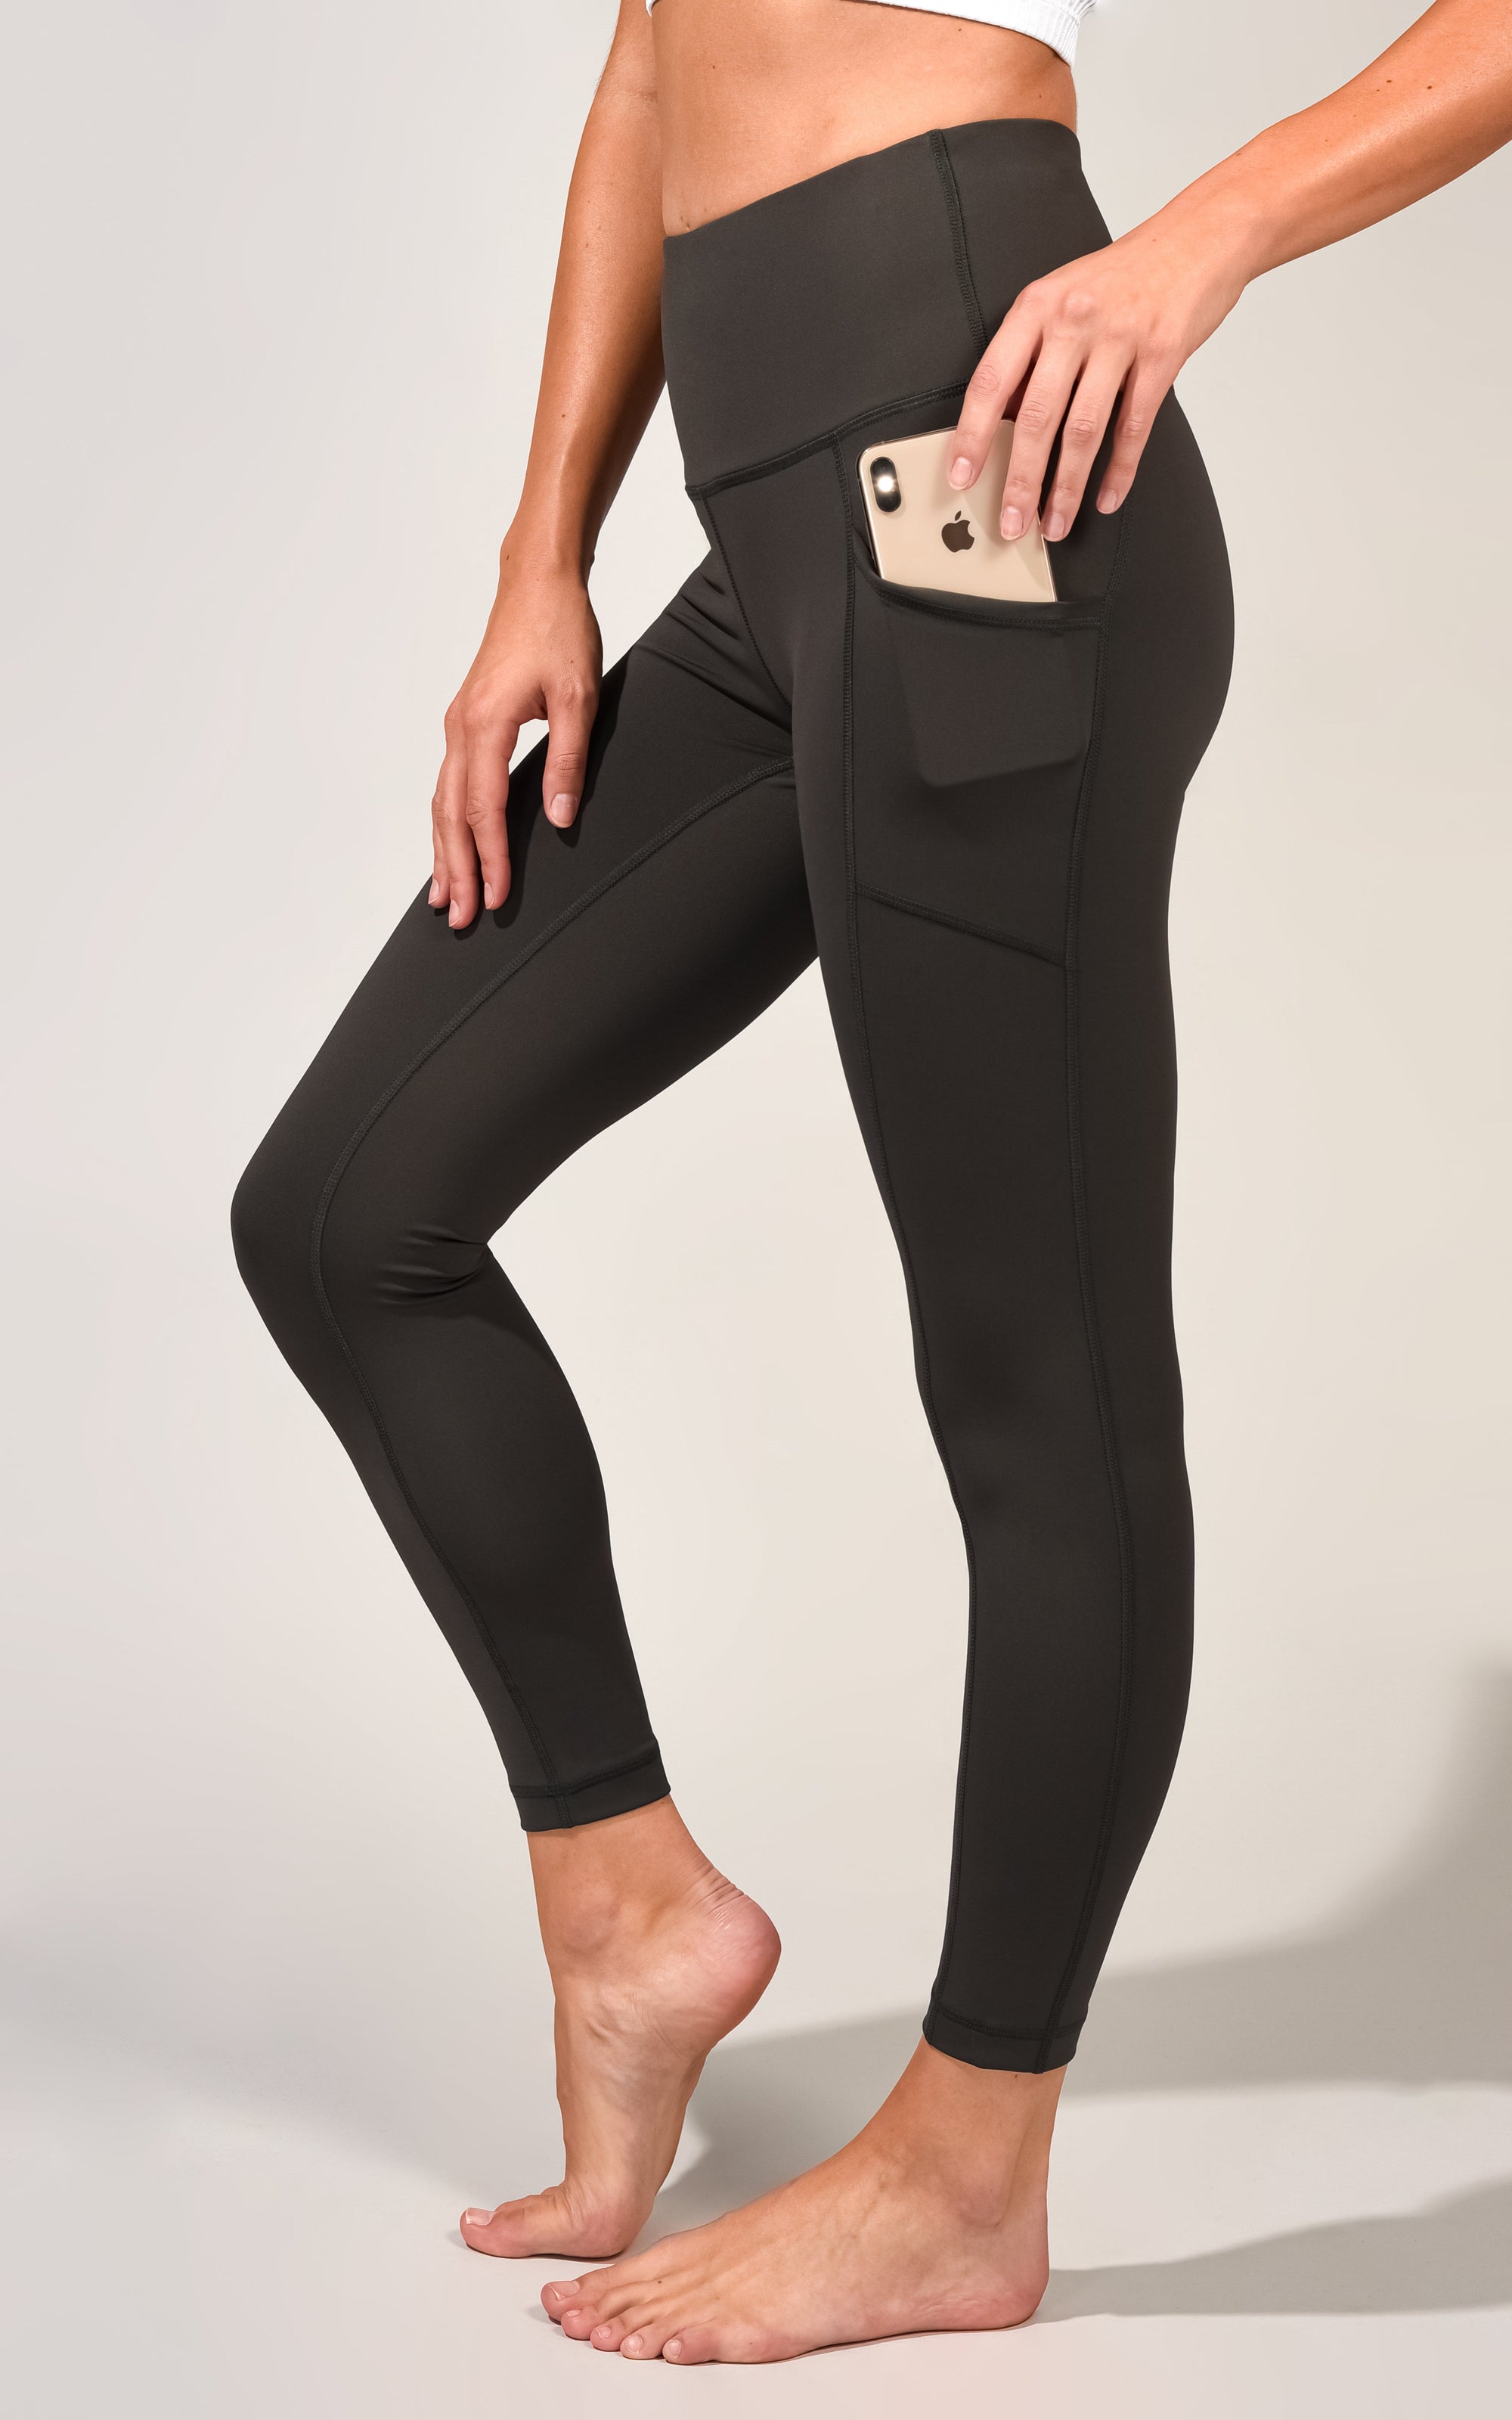 90 Degree By Reflex High Waist Squat Proof Interlink Leggings for Women -  Dark Navy - Medium